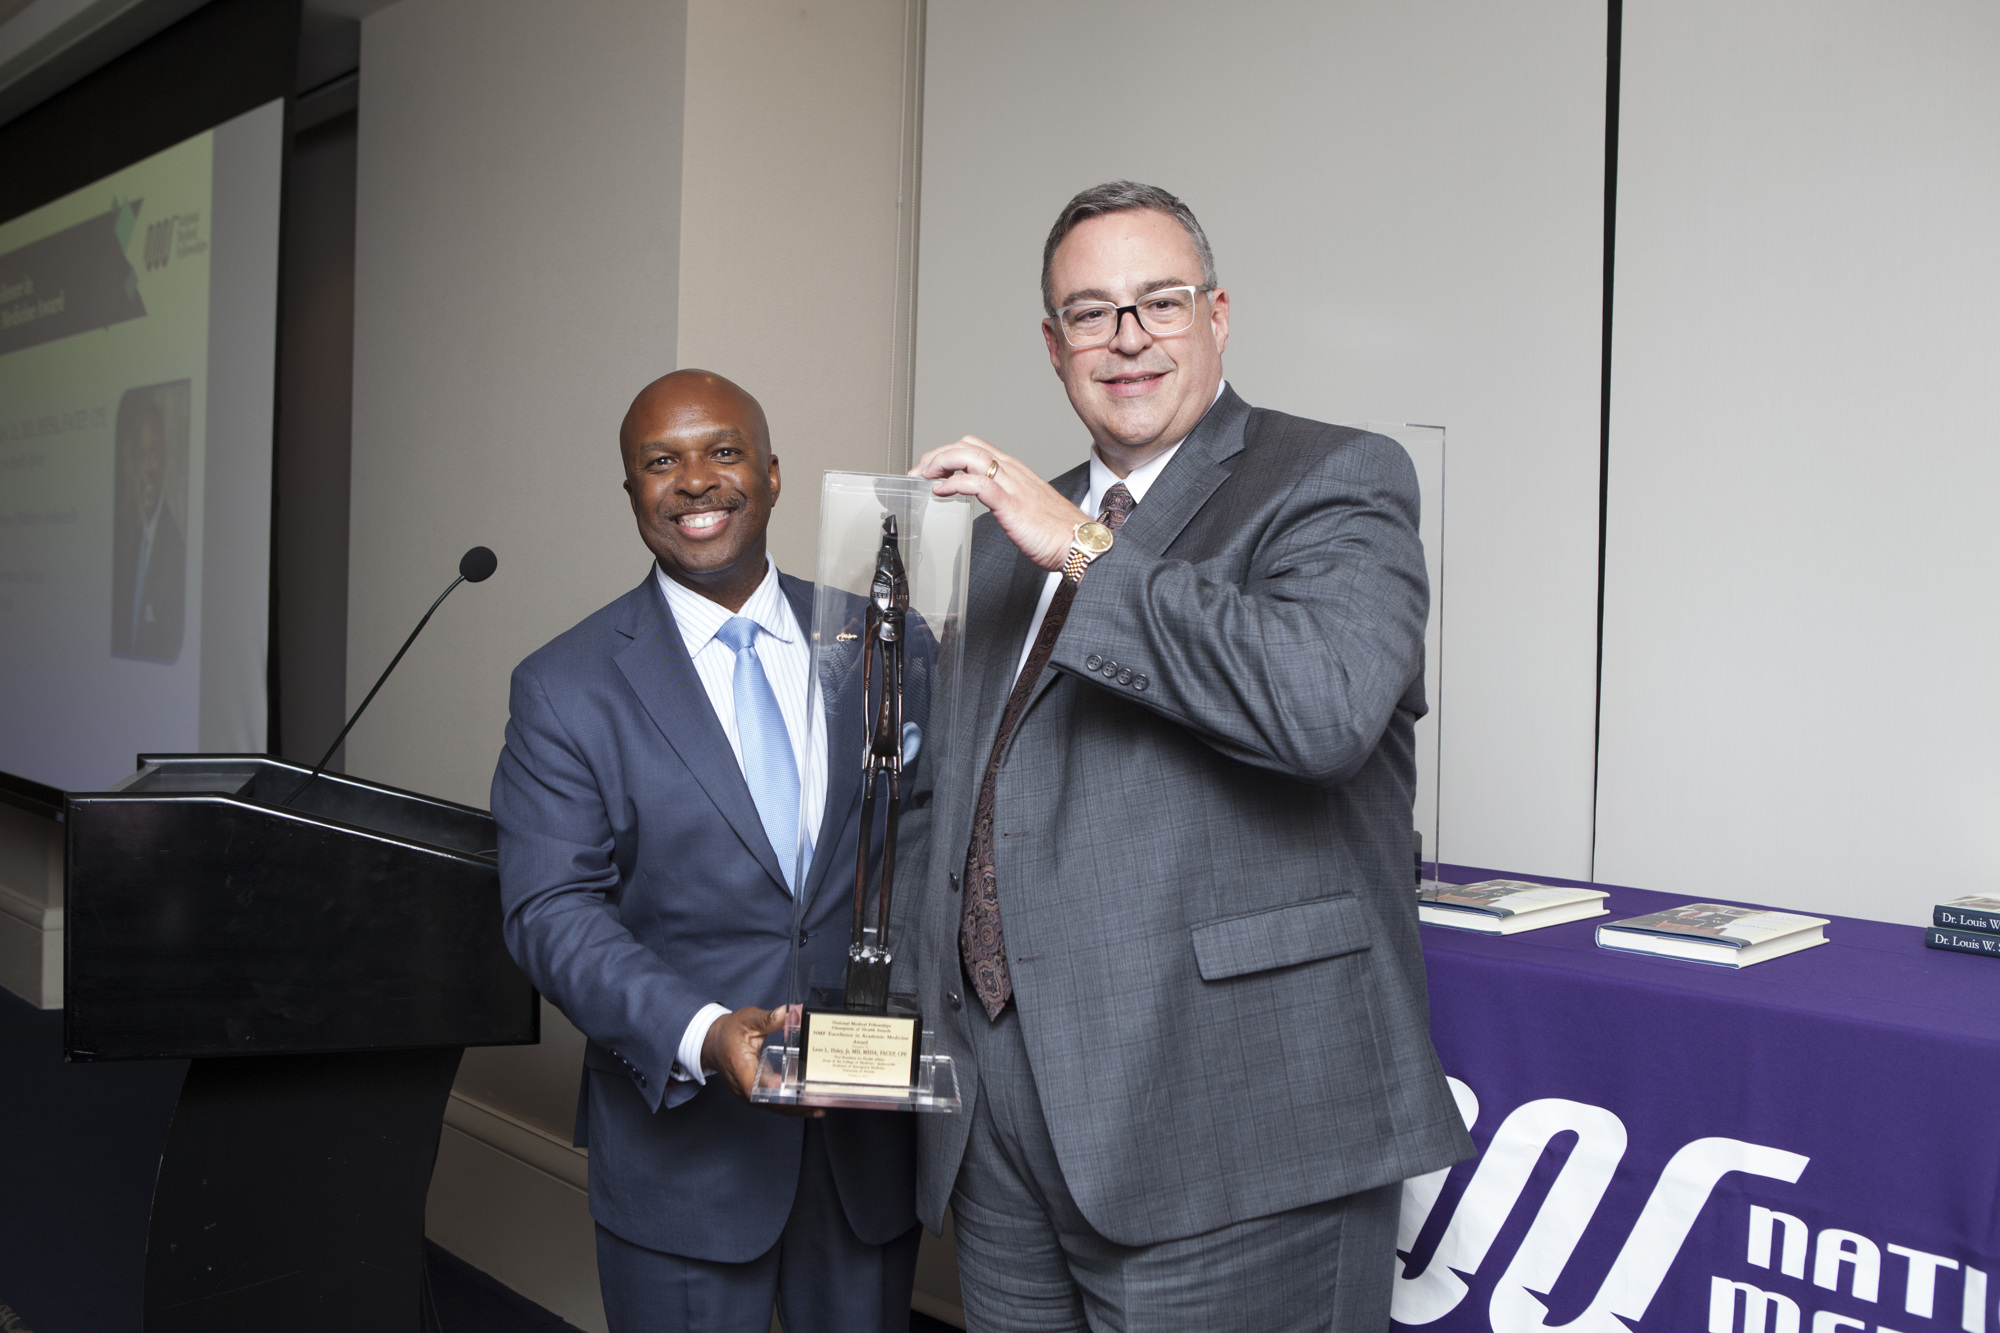 Leon Haley Jr., left, winner of the National Medical Fellowships’ Excellence in Academic Medicine Award for 2017.